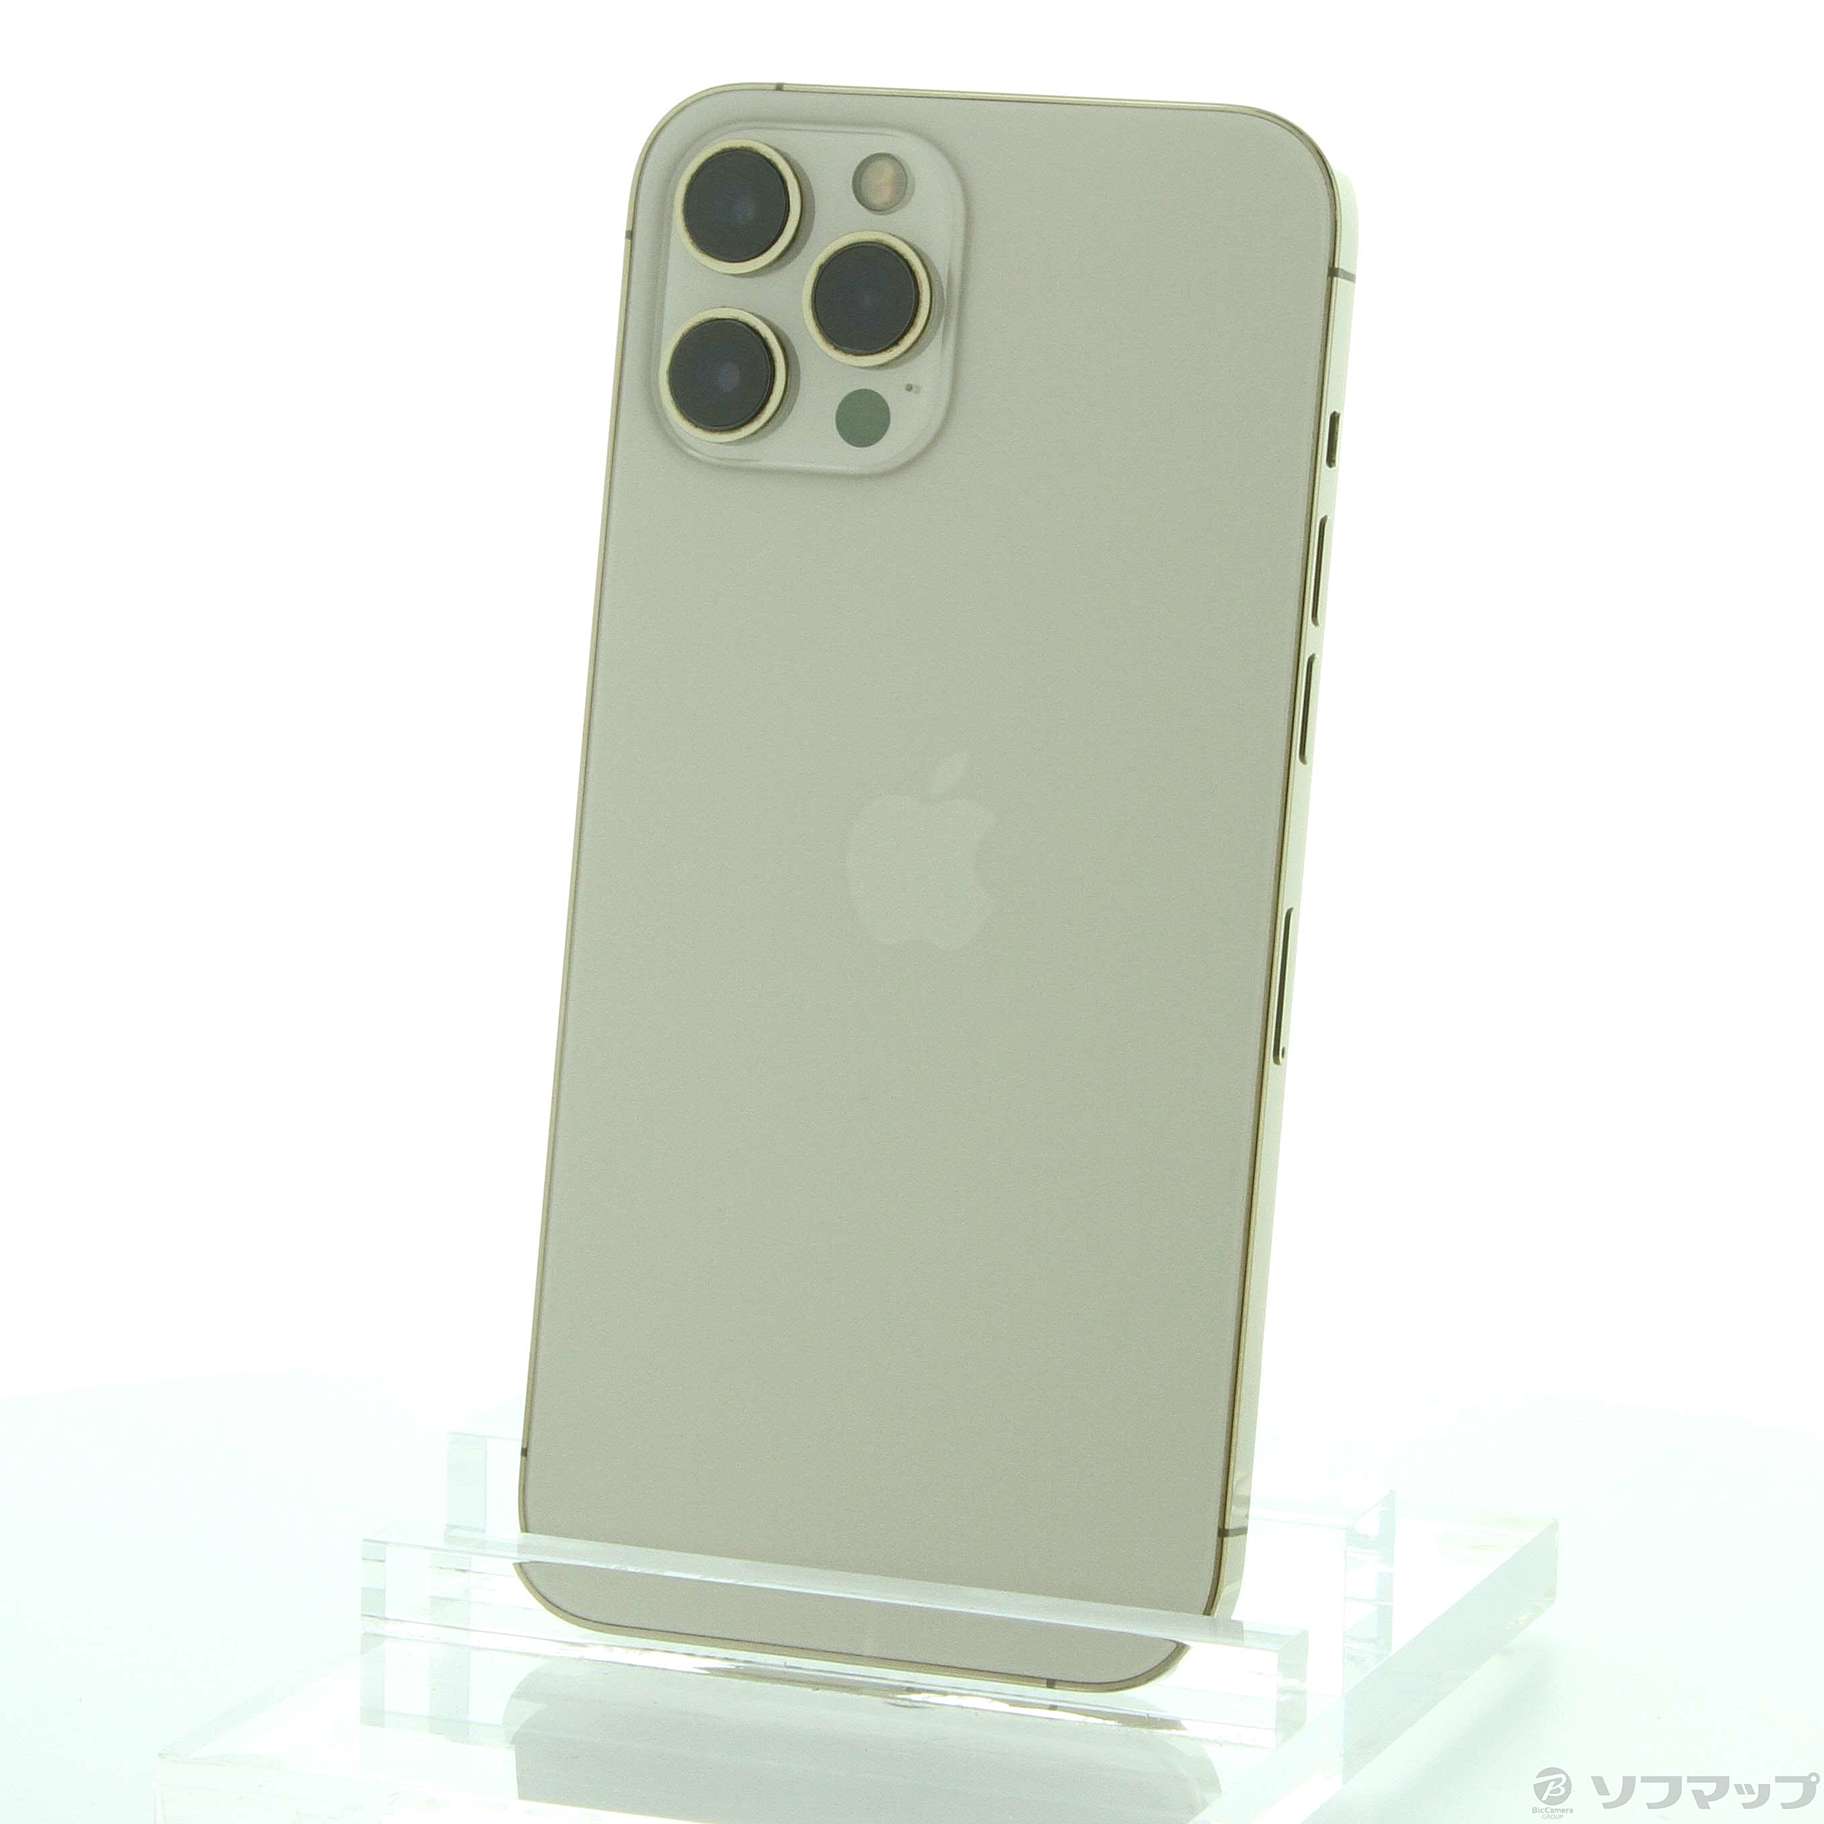 iPhone12Promax 256GB - ゴールド - Simフリー - 携帯電話本体